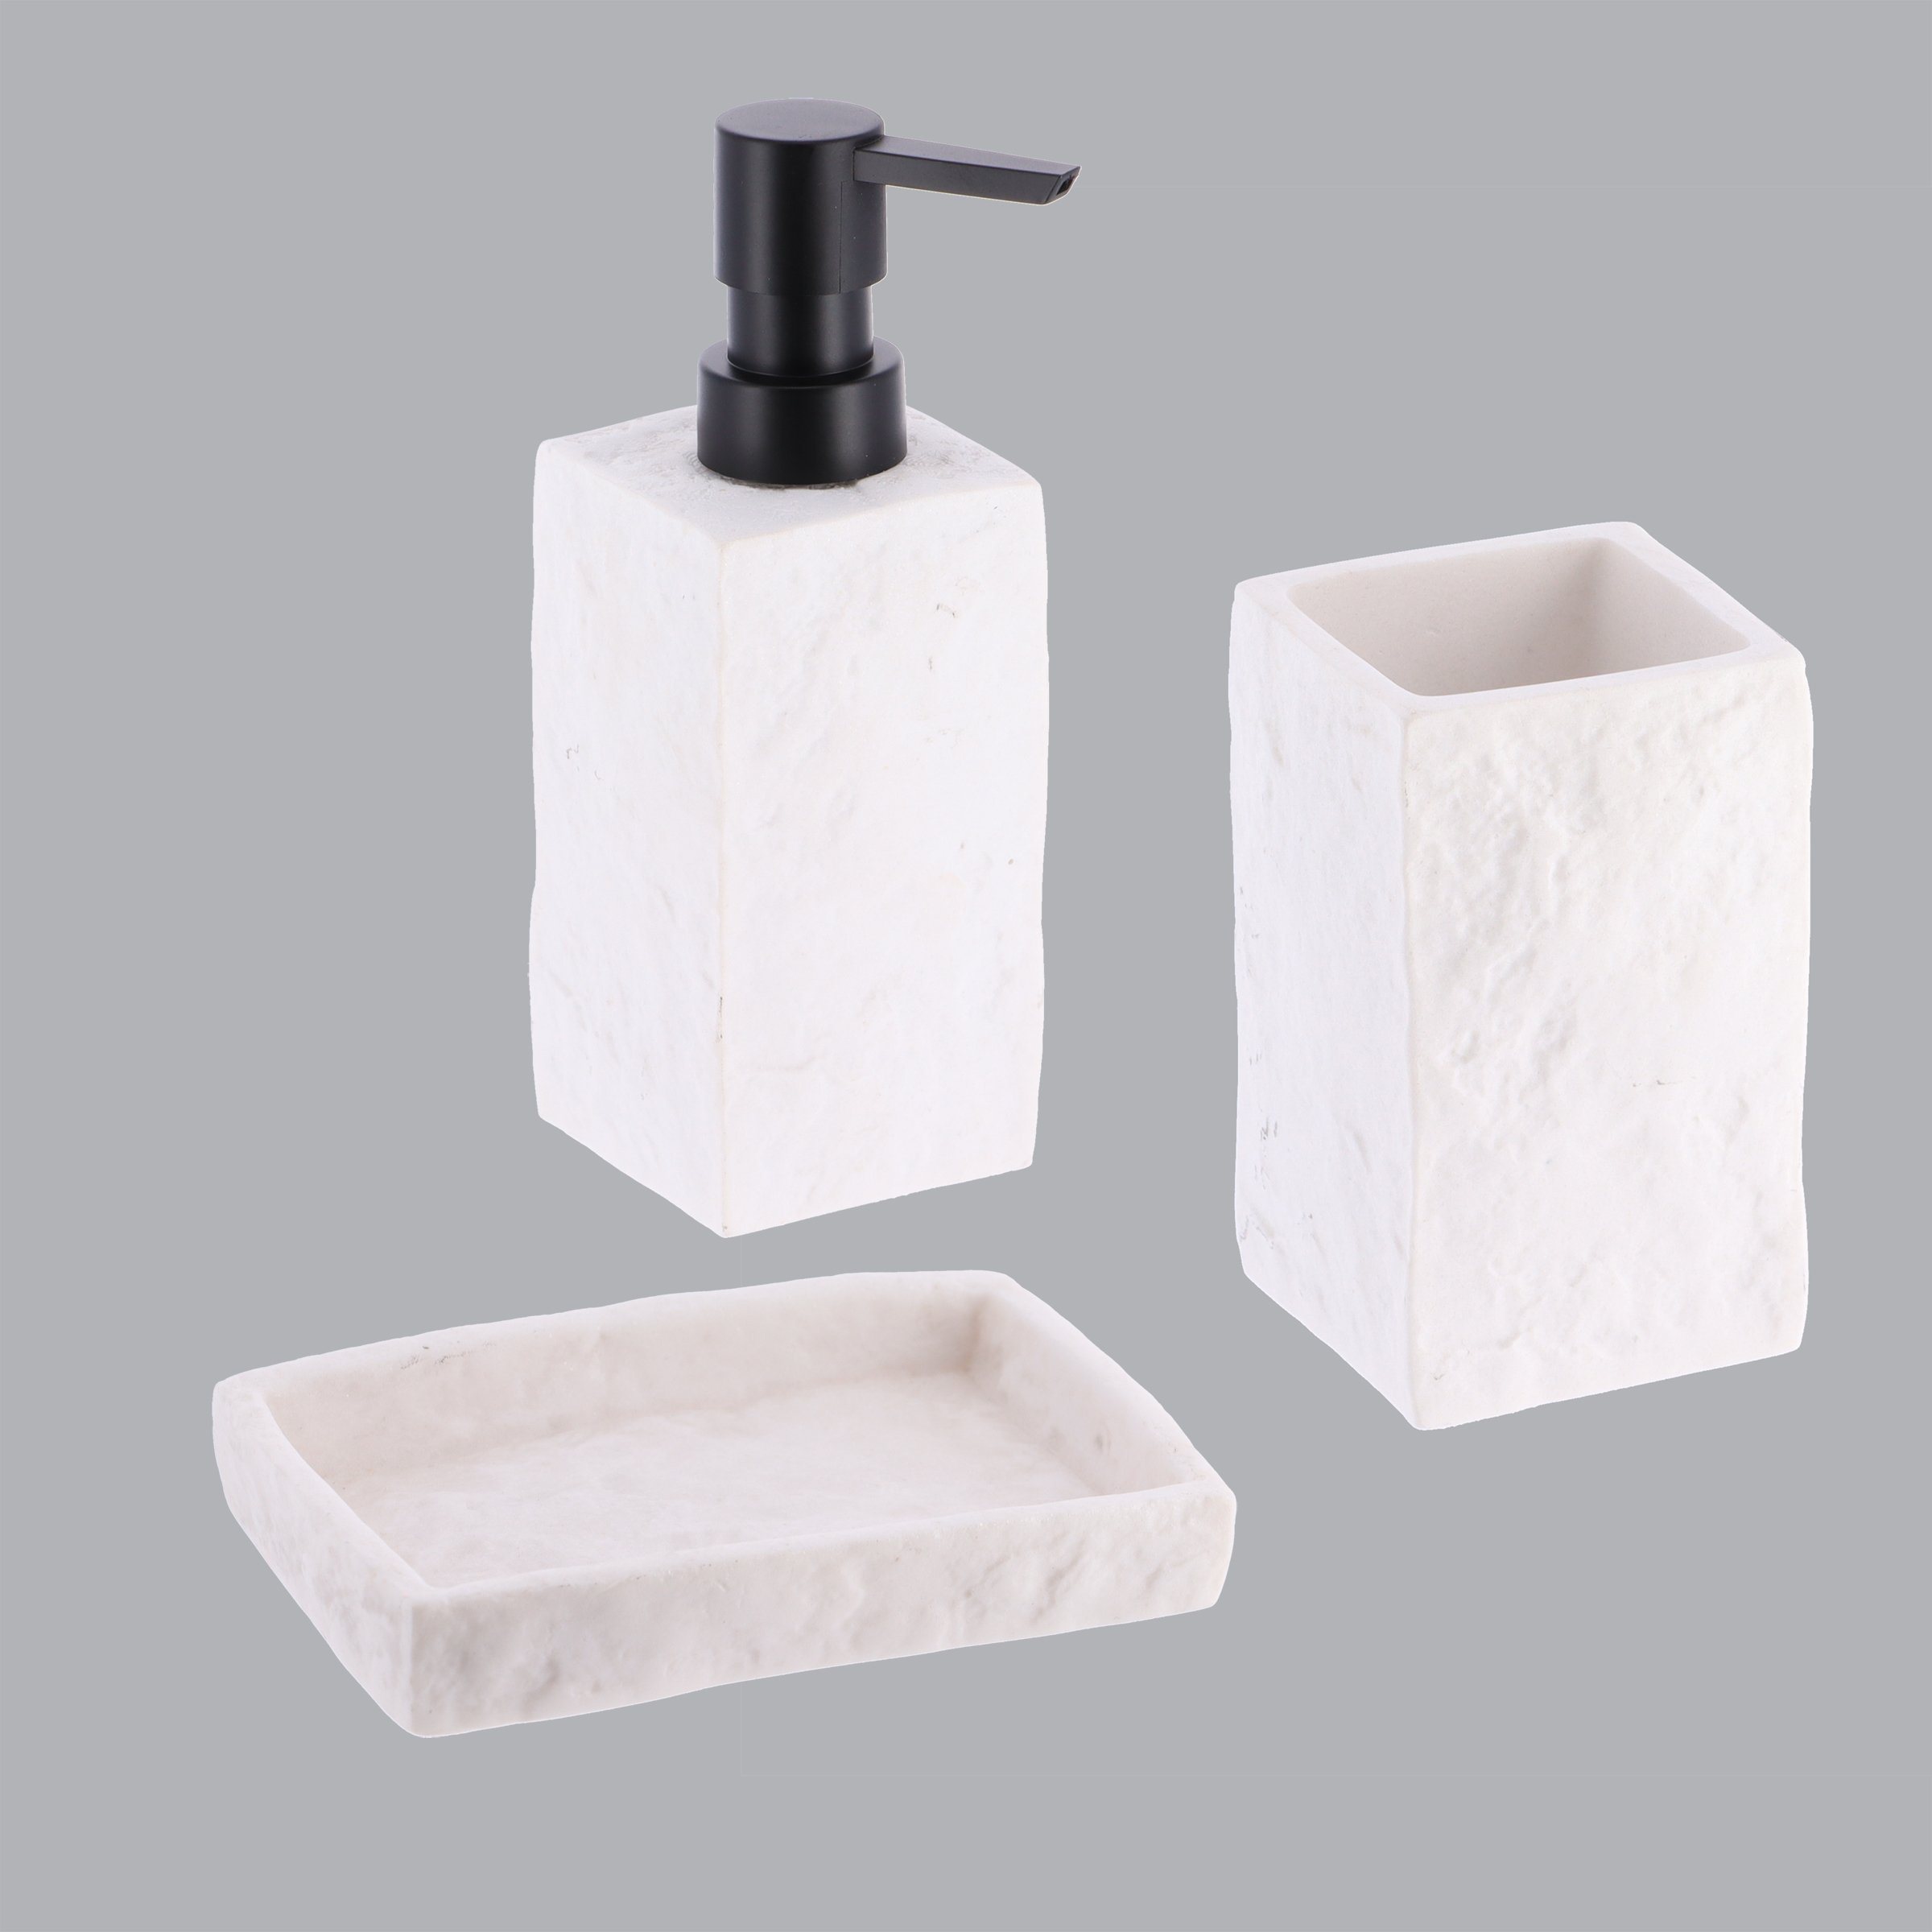 Set accesorios baño Scandi blanco